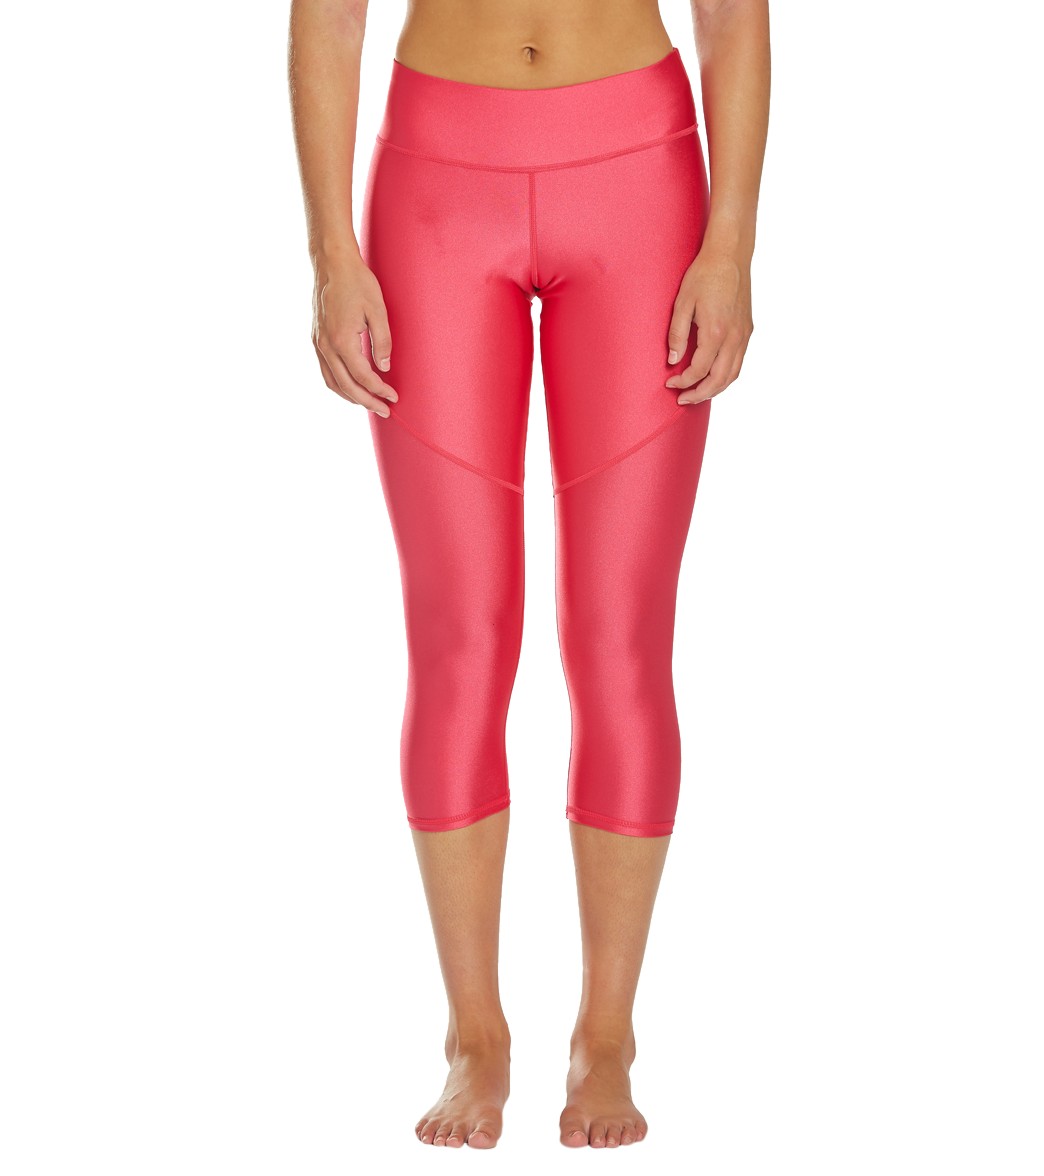 Dolfin Uglies Women's Revibe Solid High-Shine Aqua Capri Pants - Cherry Pink Xl Size Xl Nylon/Spandex - Swimoutlet.com